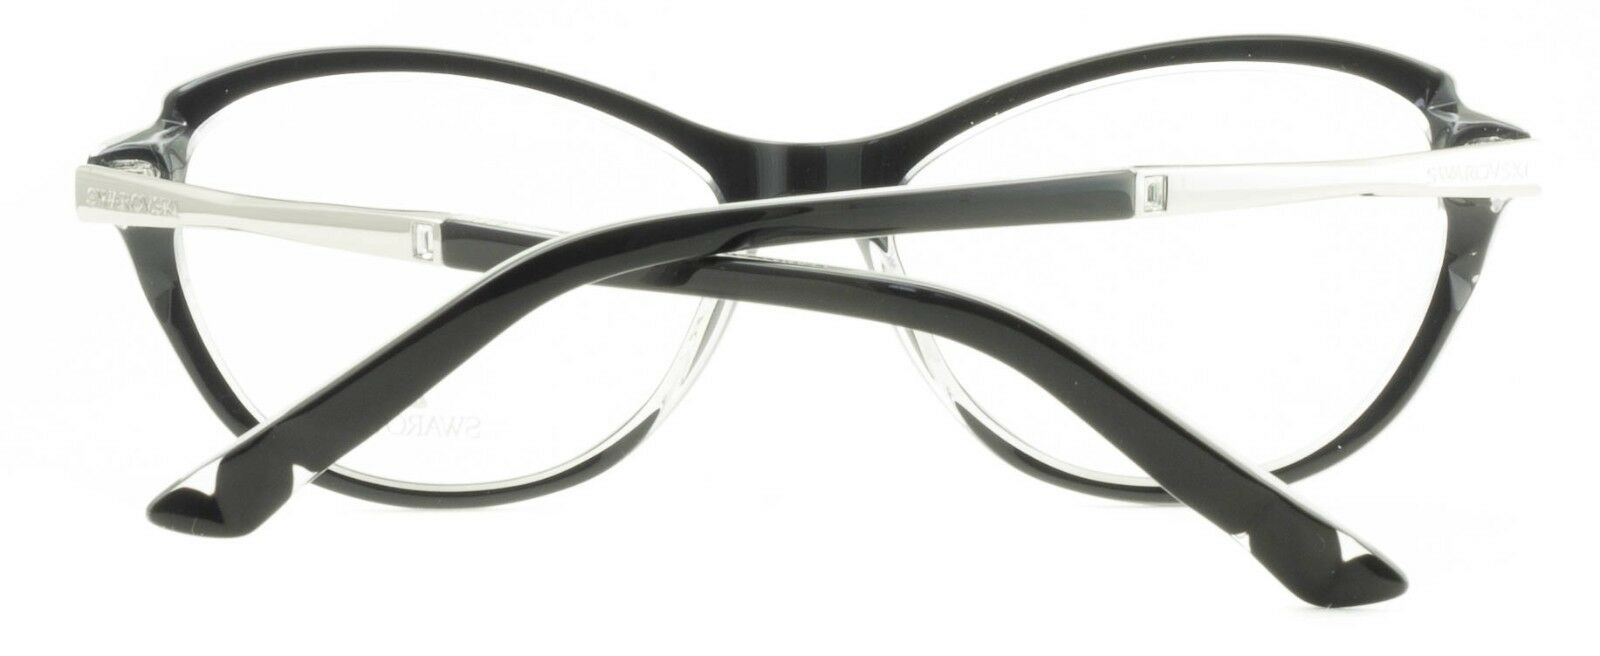 SWAROVSKI FANNY SW 5156 005 Eyewear FRAMES RX Optical Glasses Eyeglasses - BNIB